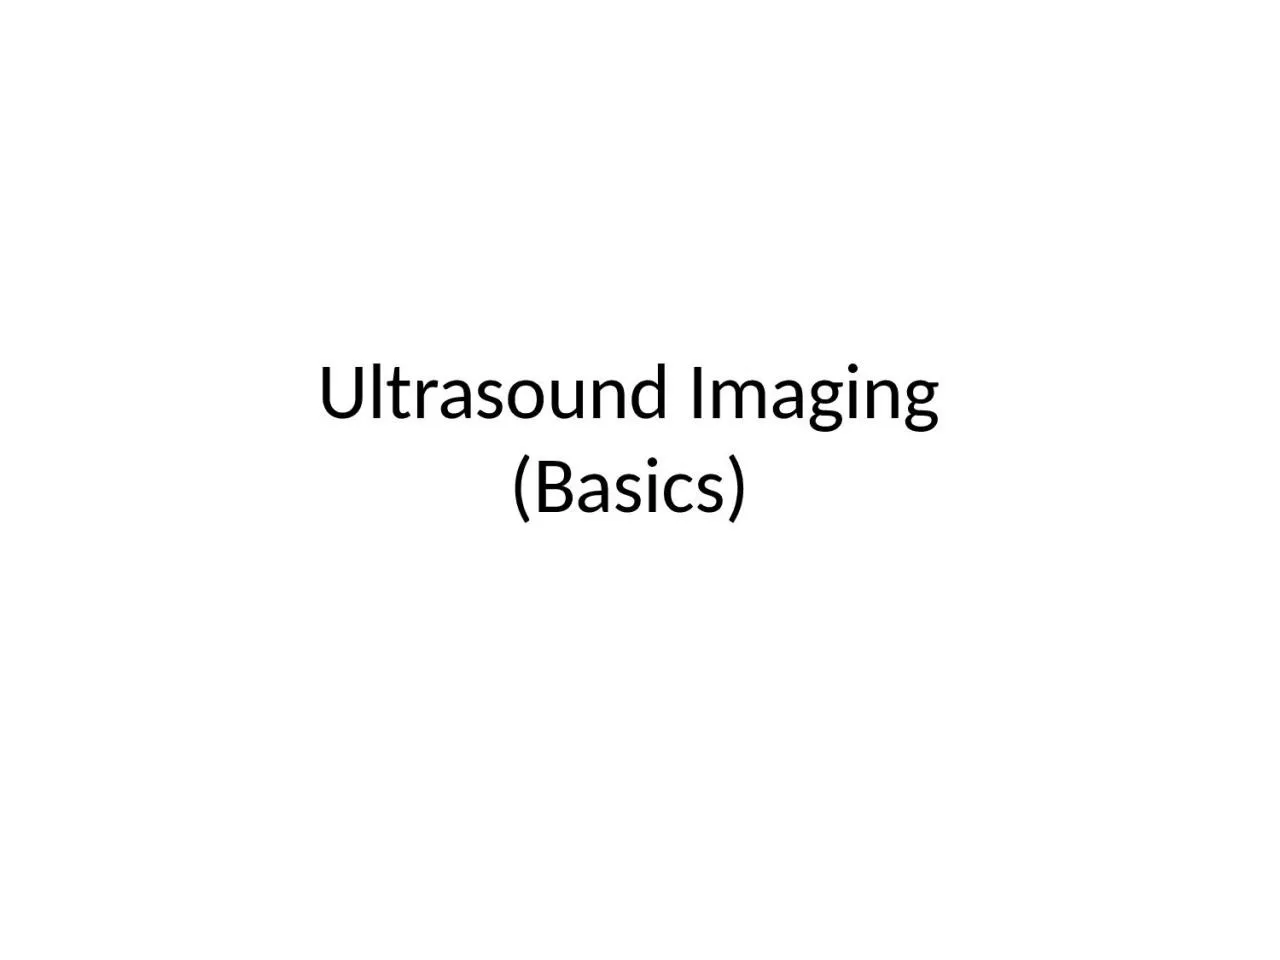 Ultrasound Imaging (Basics)